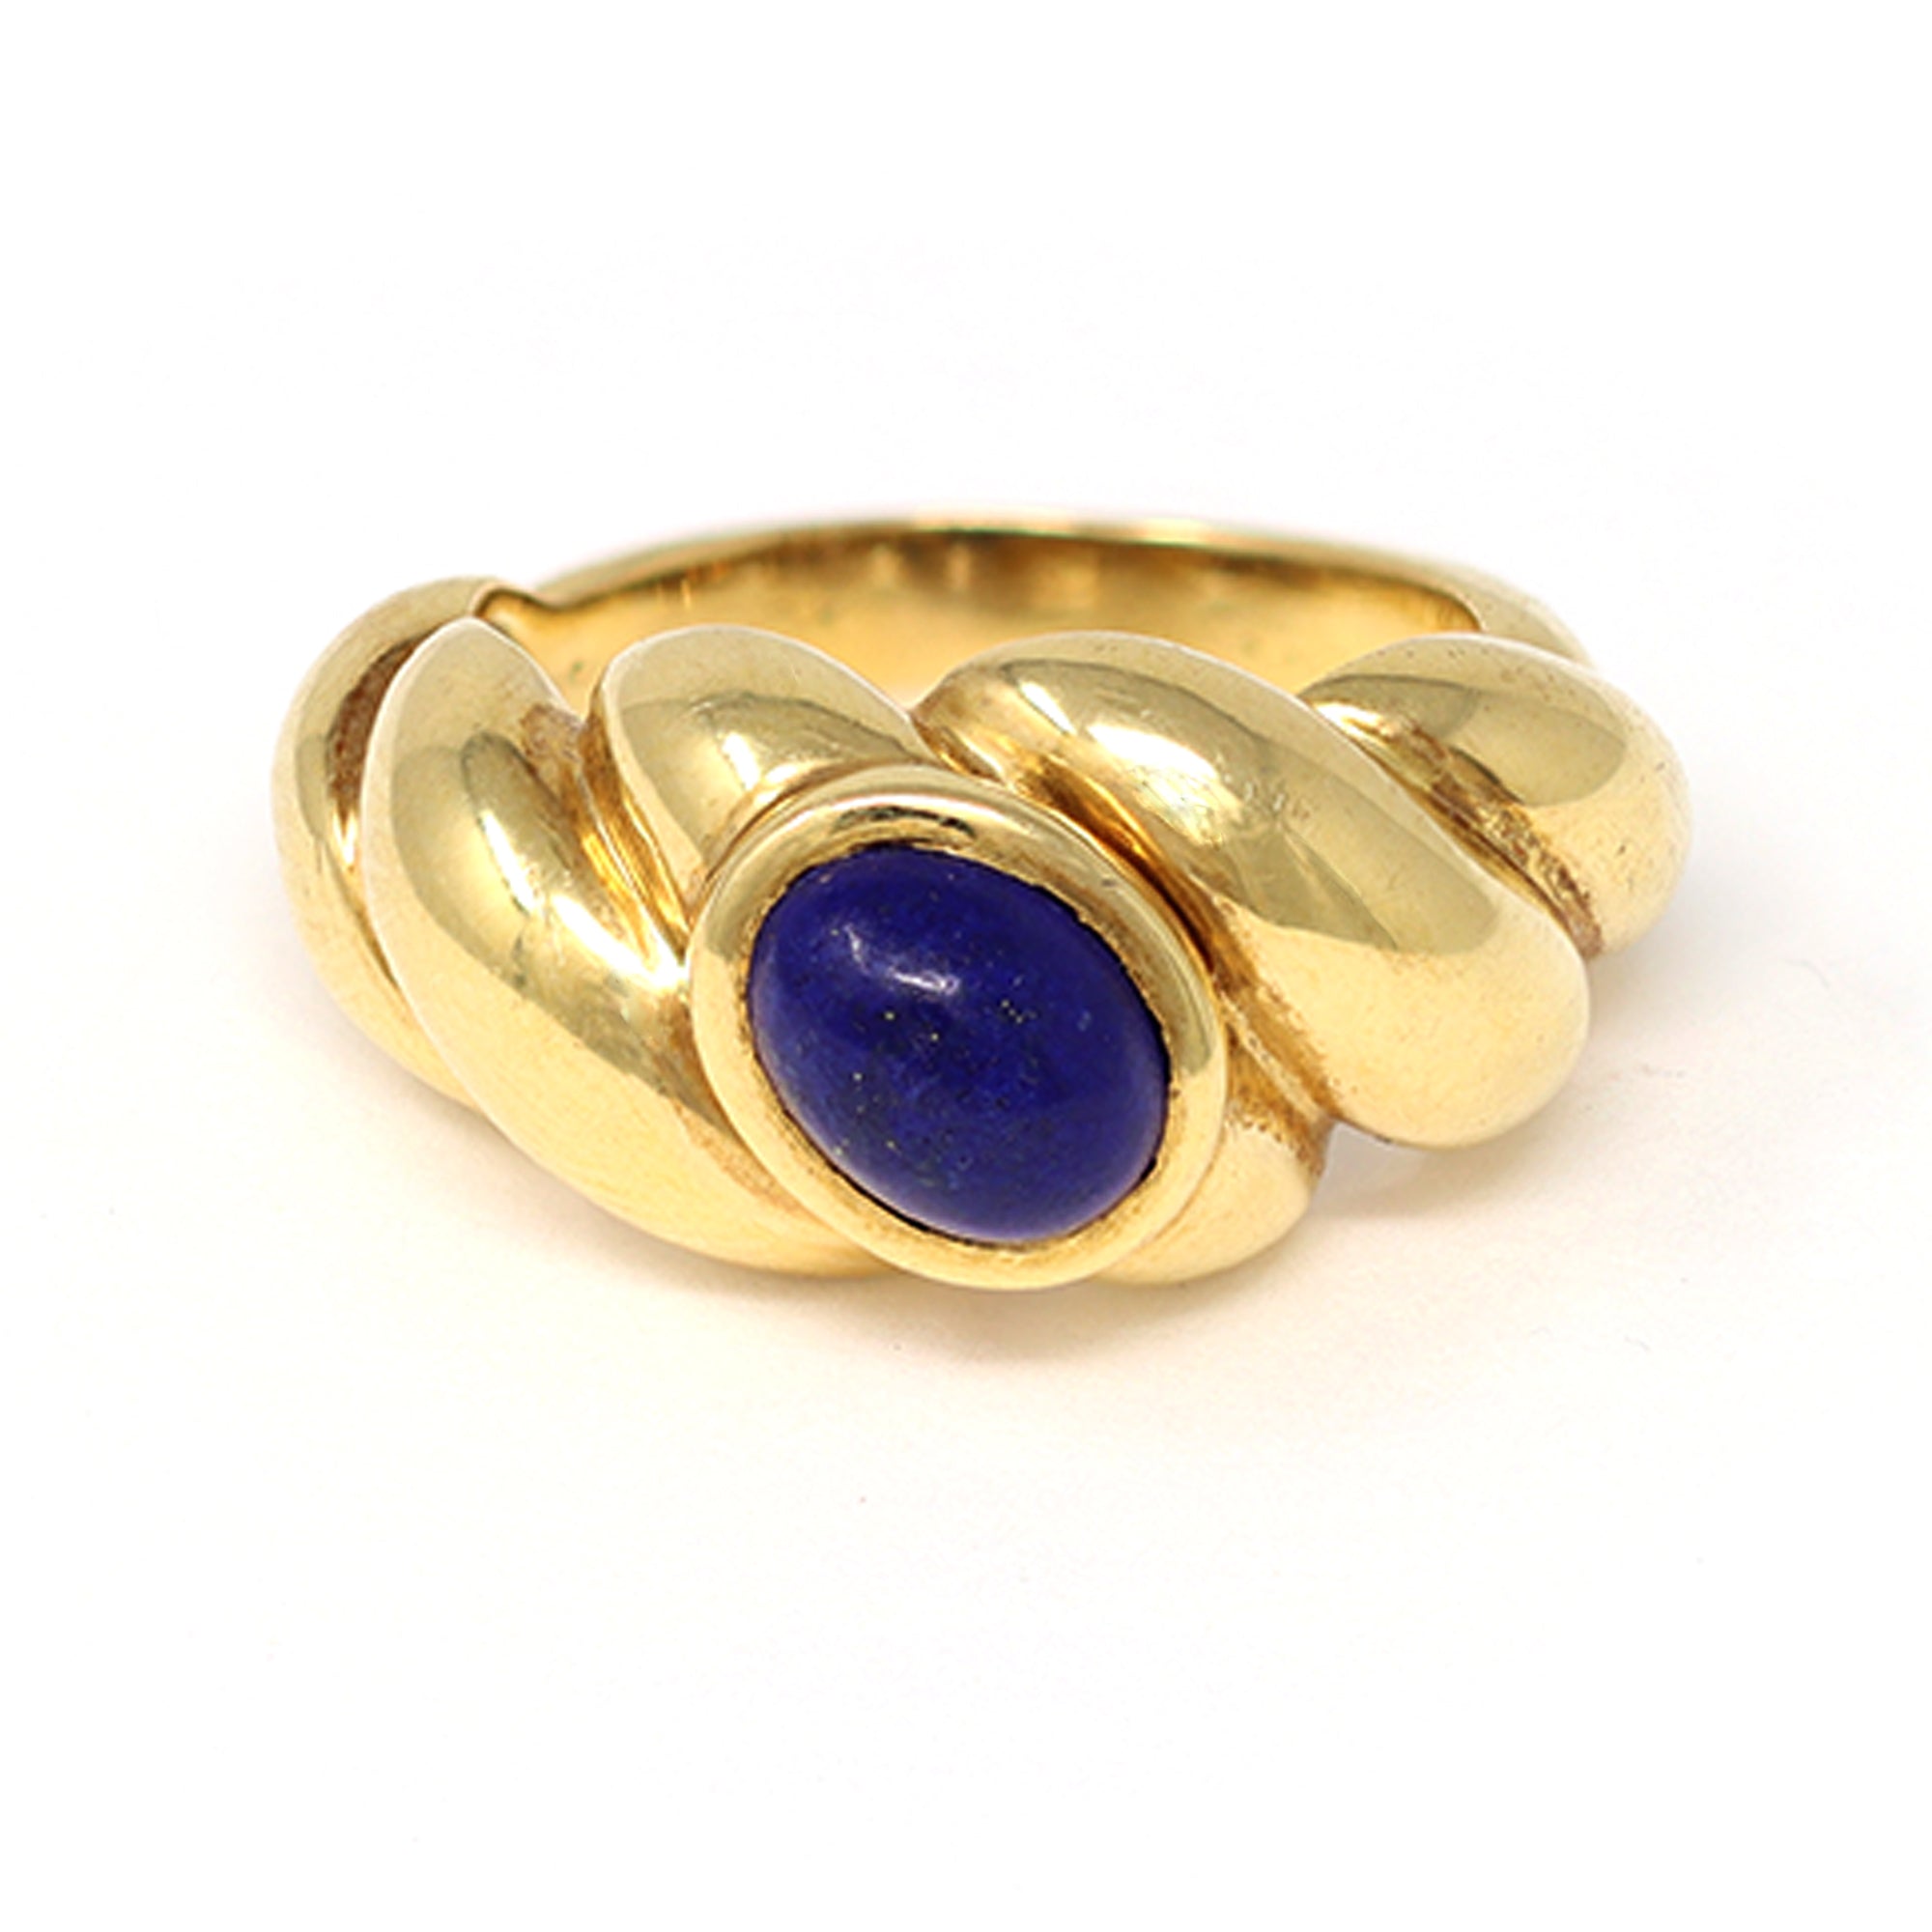 Van Cleef & Arpels Lapis Lazuli Cabochon Ring Set in 18k Yellow Gold top view